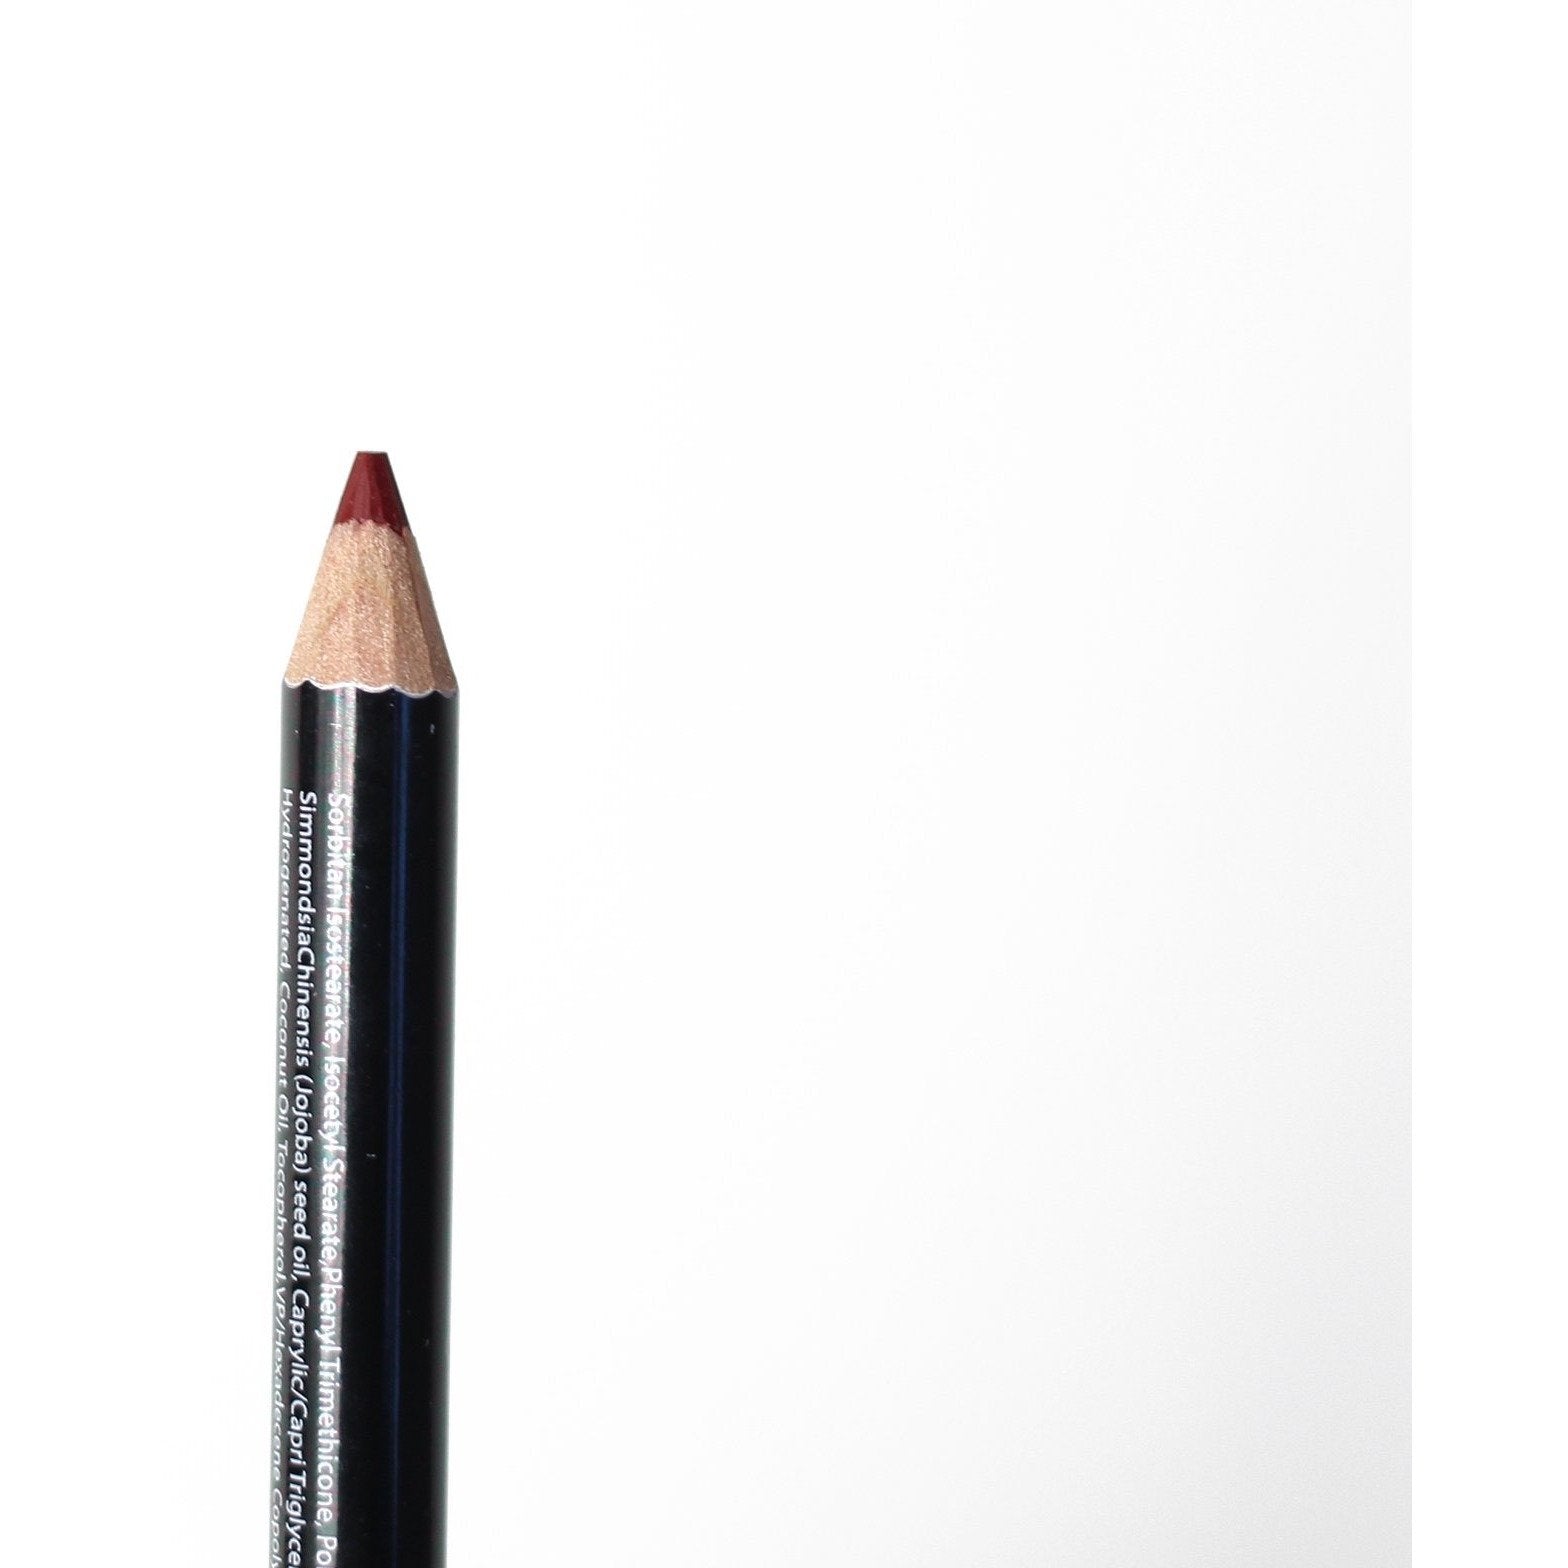 Lip Liner Pencils - Crownbrush